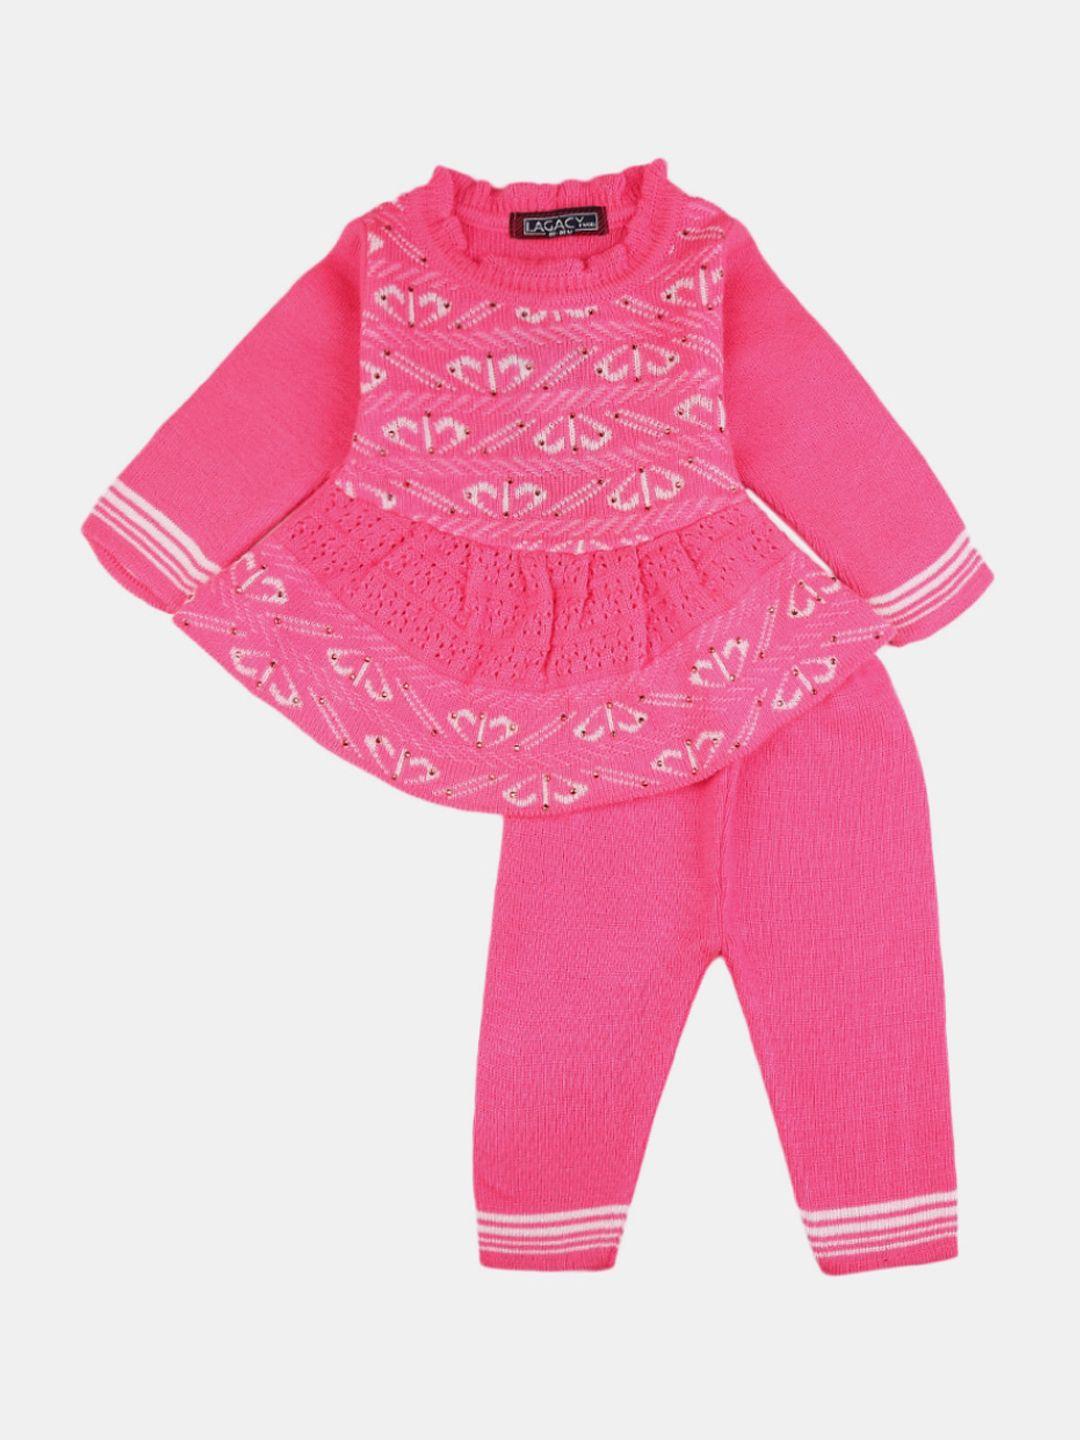 V-Mart Unisex Kids Pink & Off White Clothing Set